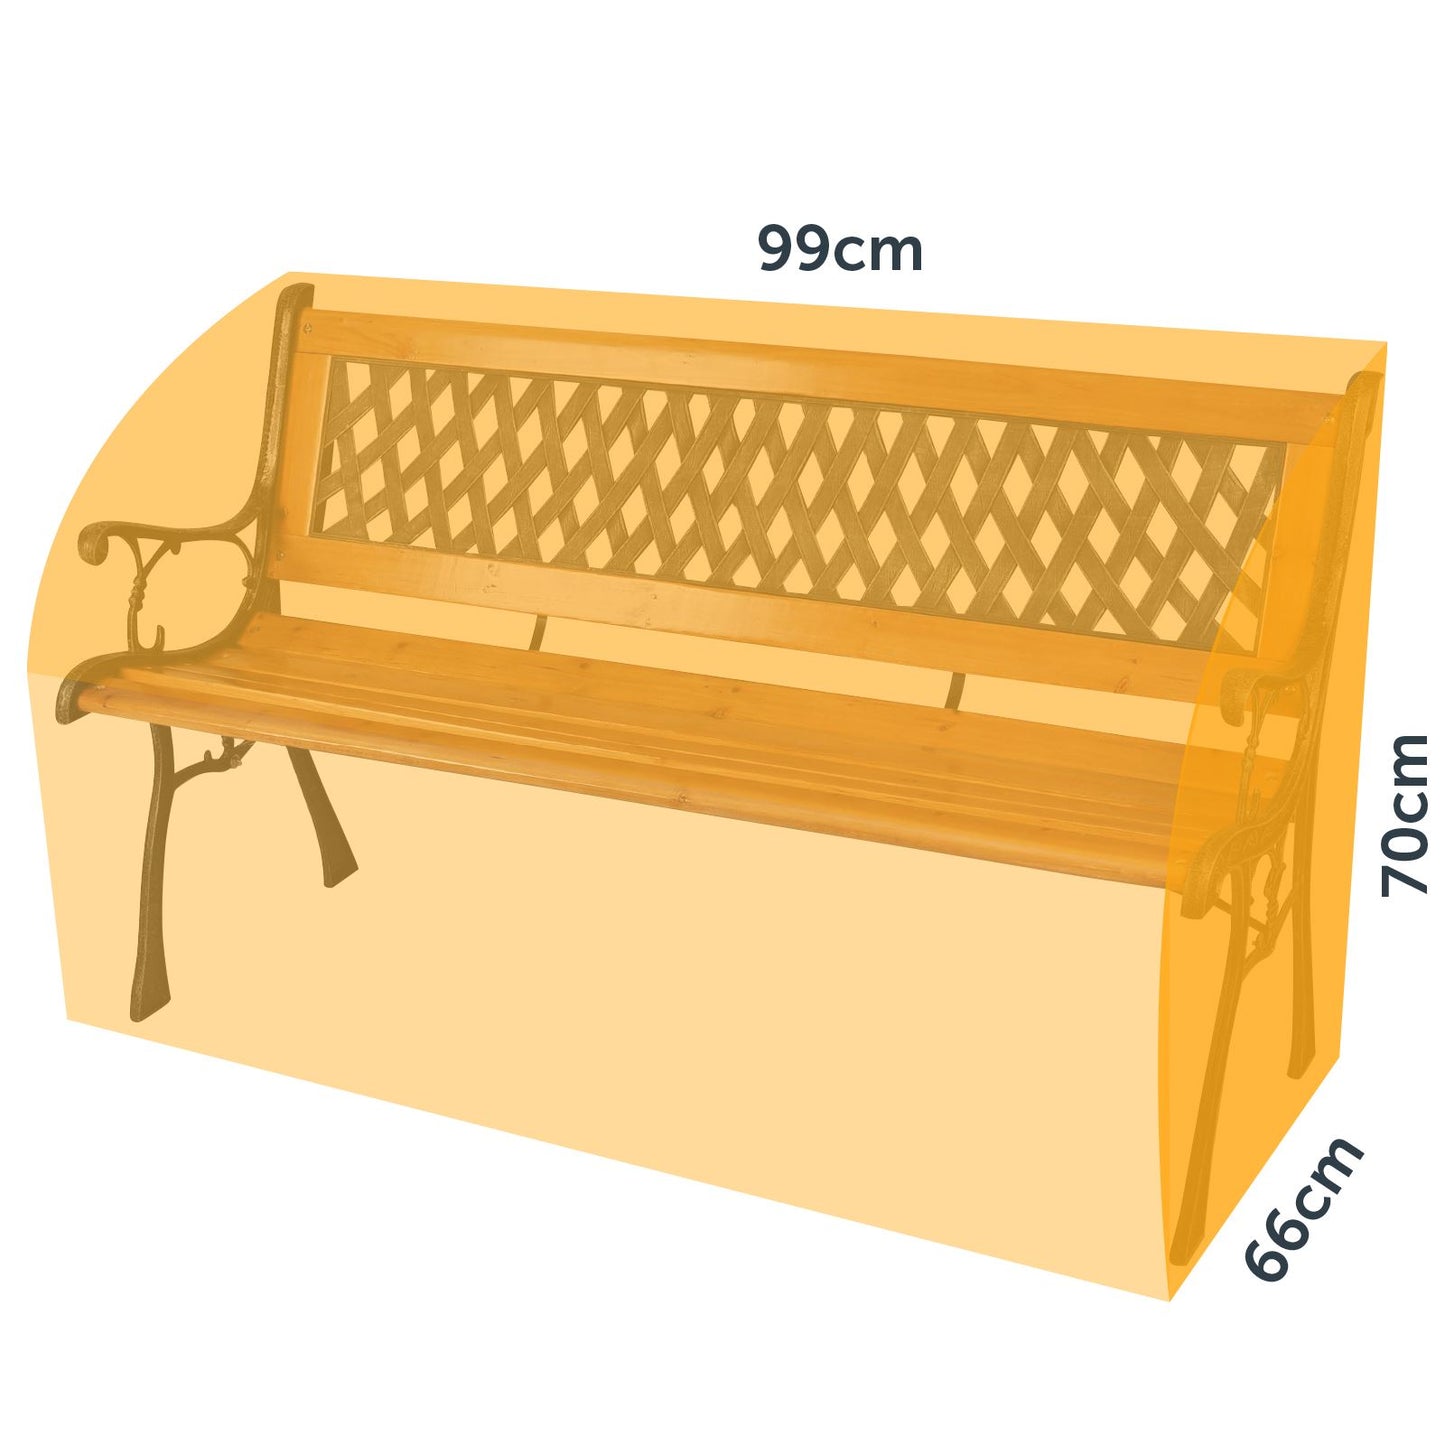 Stretchable Sofa Cover, Elastic Furniture Protector